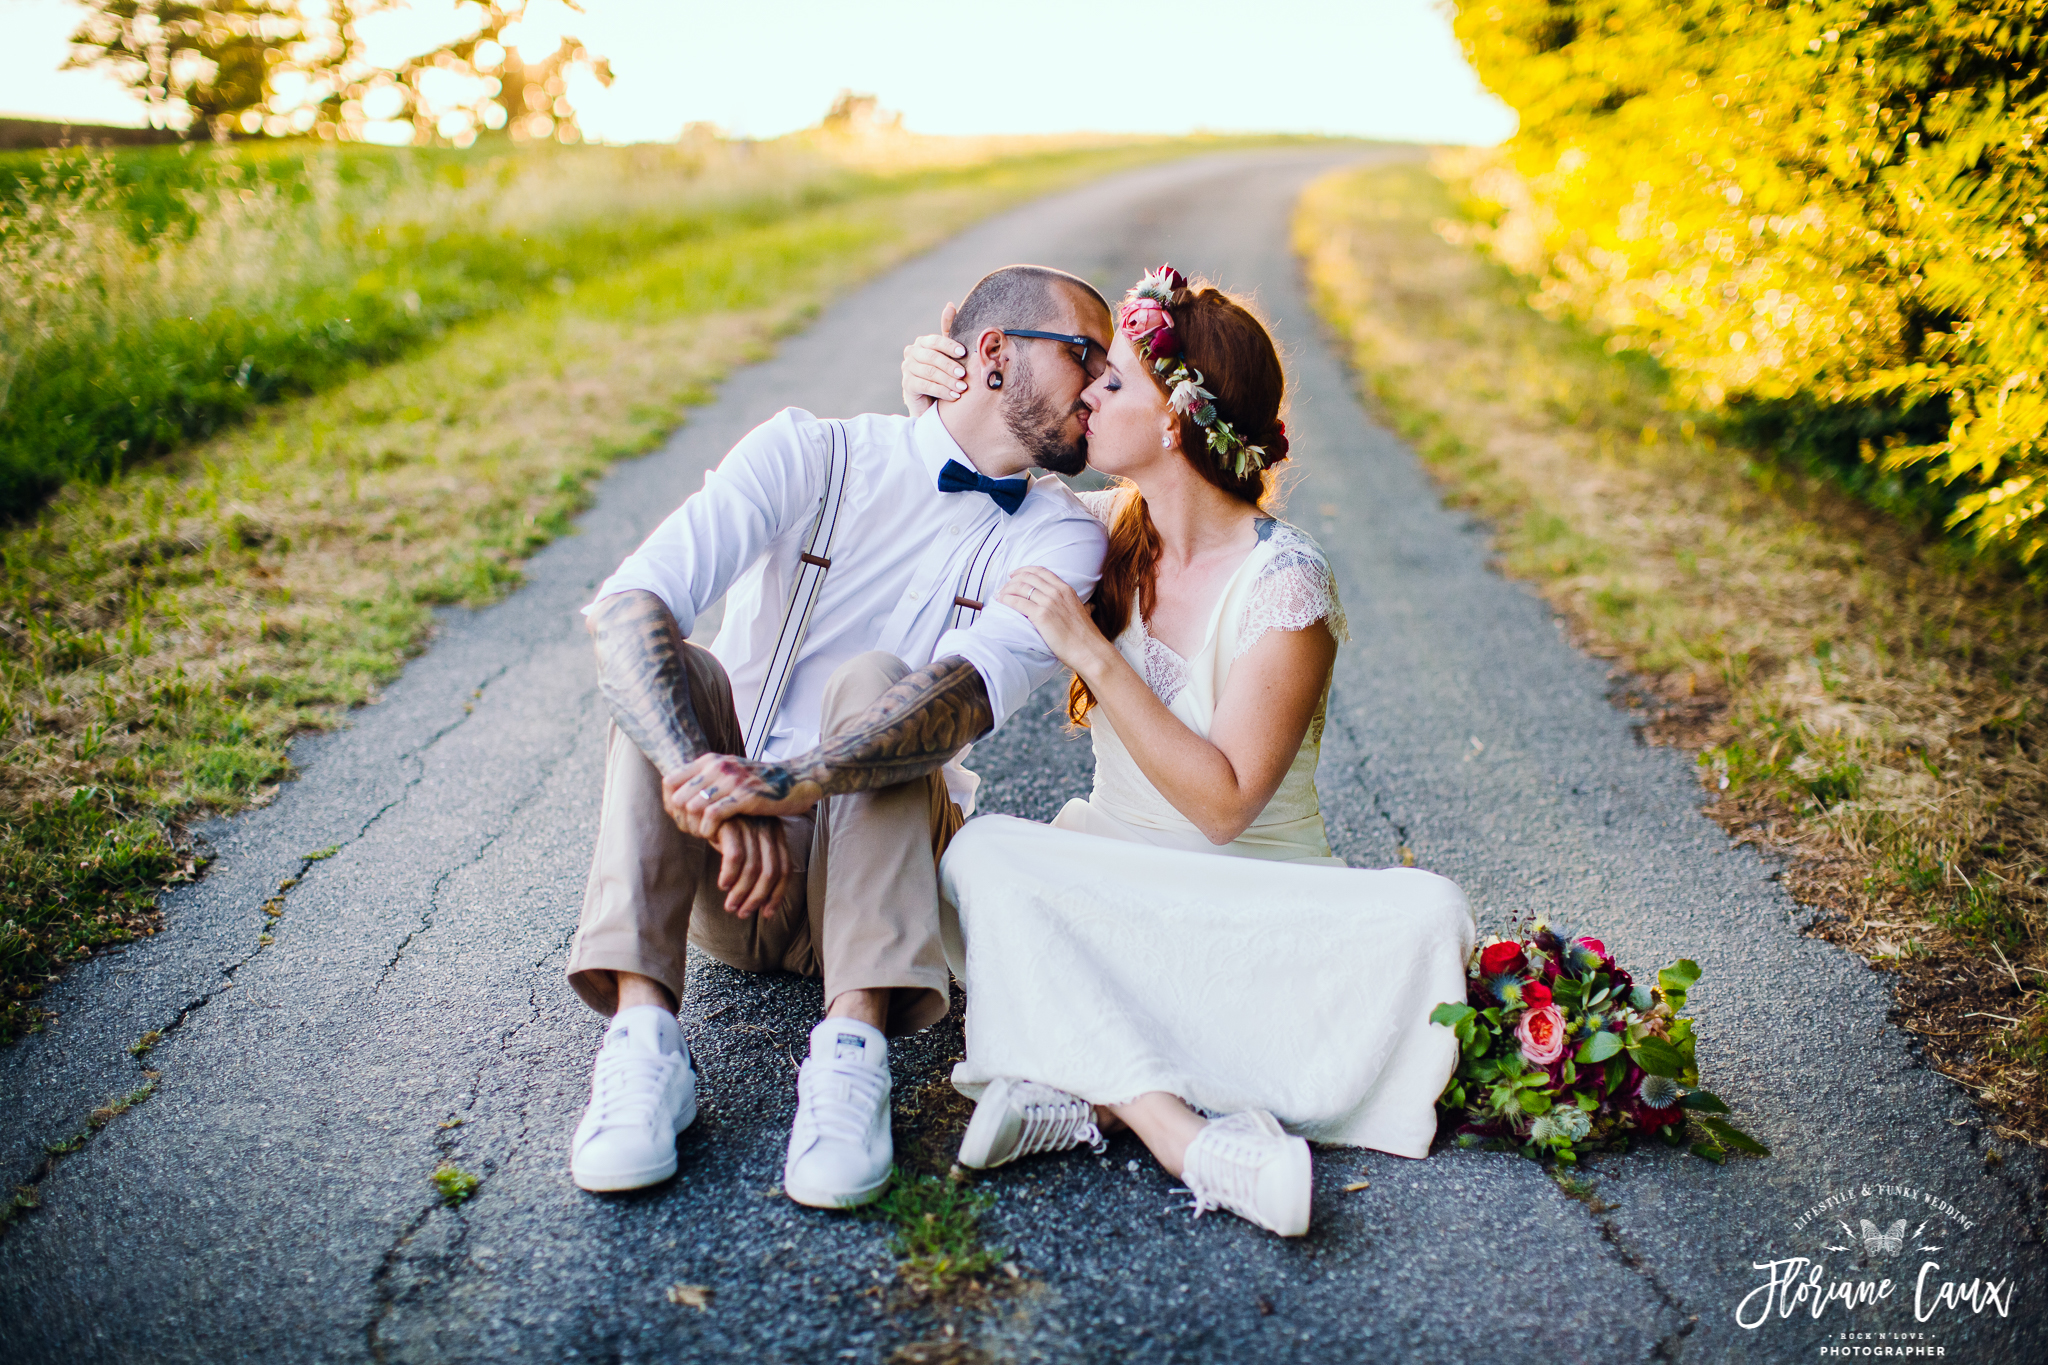 photographe-mariage-toulouse-rocknroll-maries-tatoues-floriane-caux-71